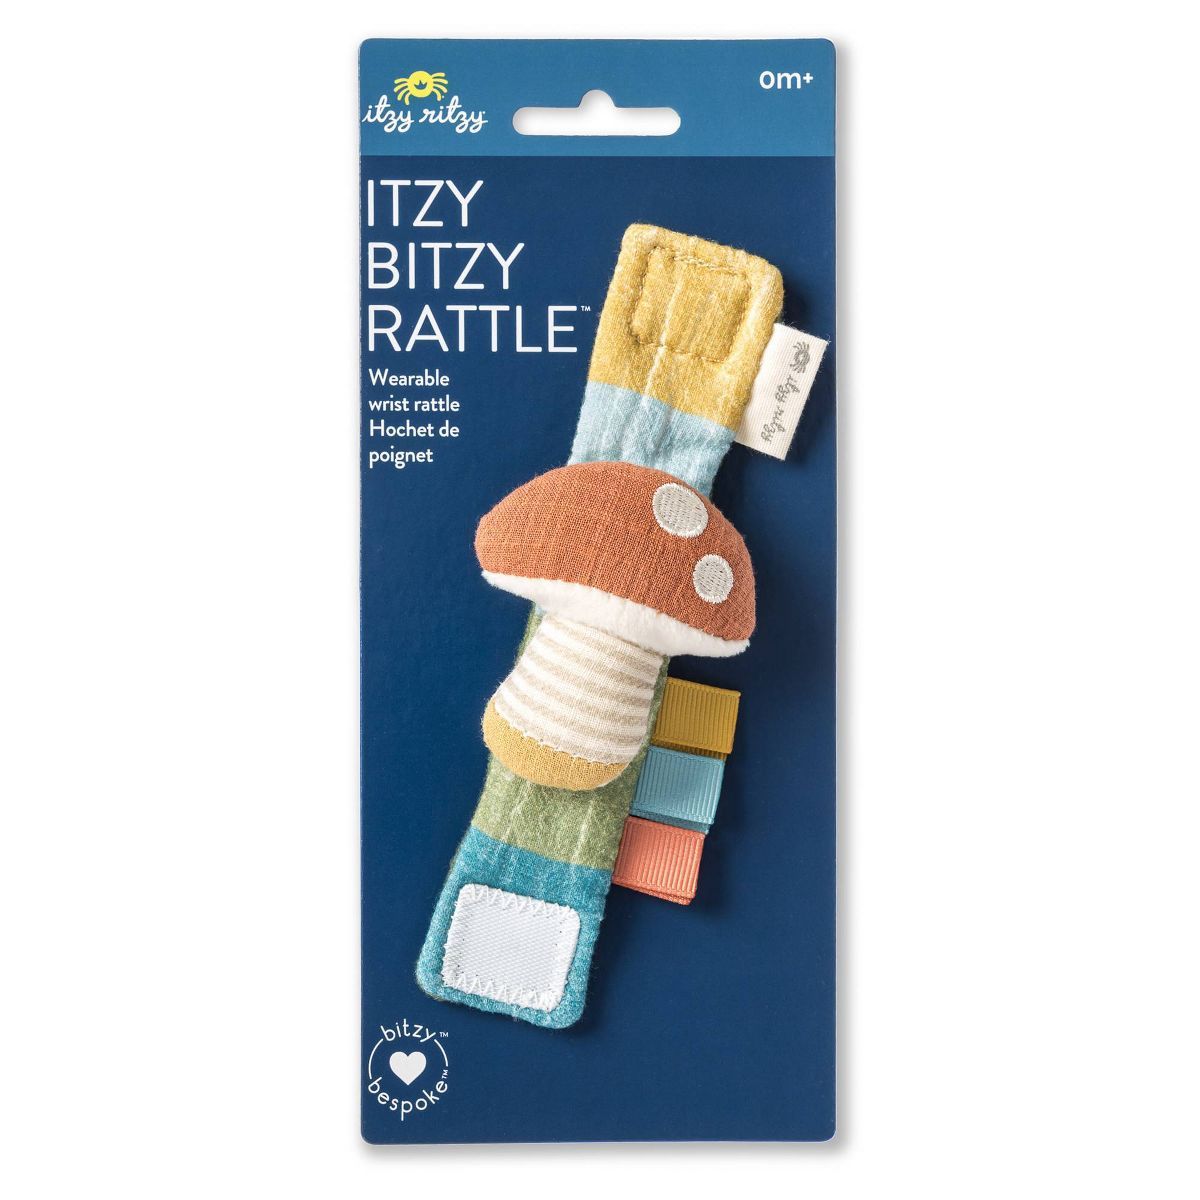 Itzy Ritzy Bitzy Wearable Wrist Rattle Baby Activity Toy - Mushroom | Target